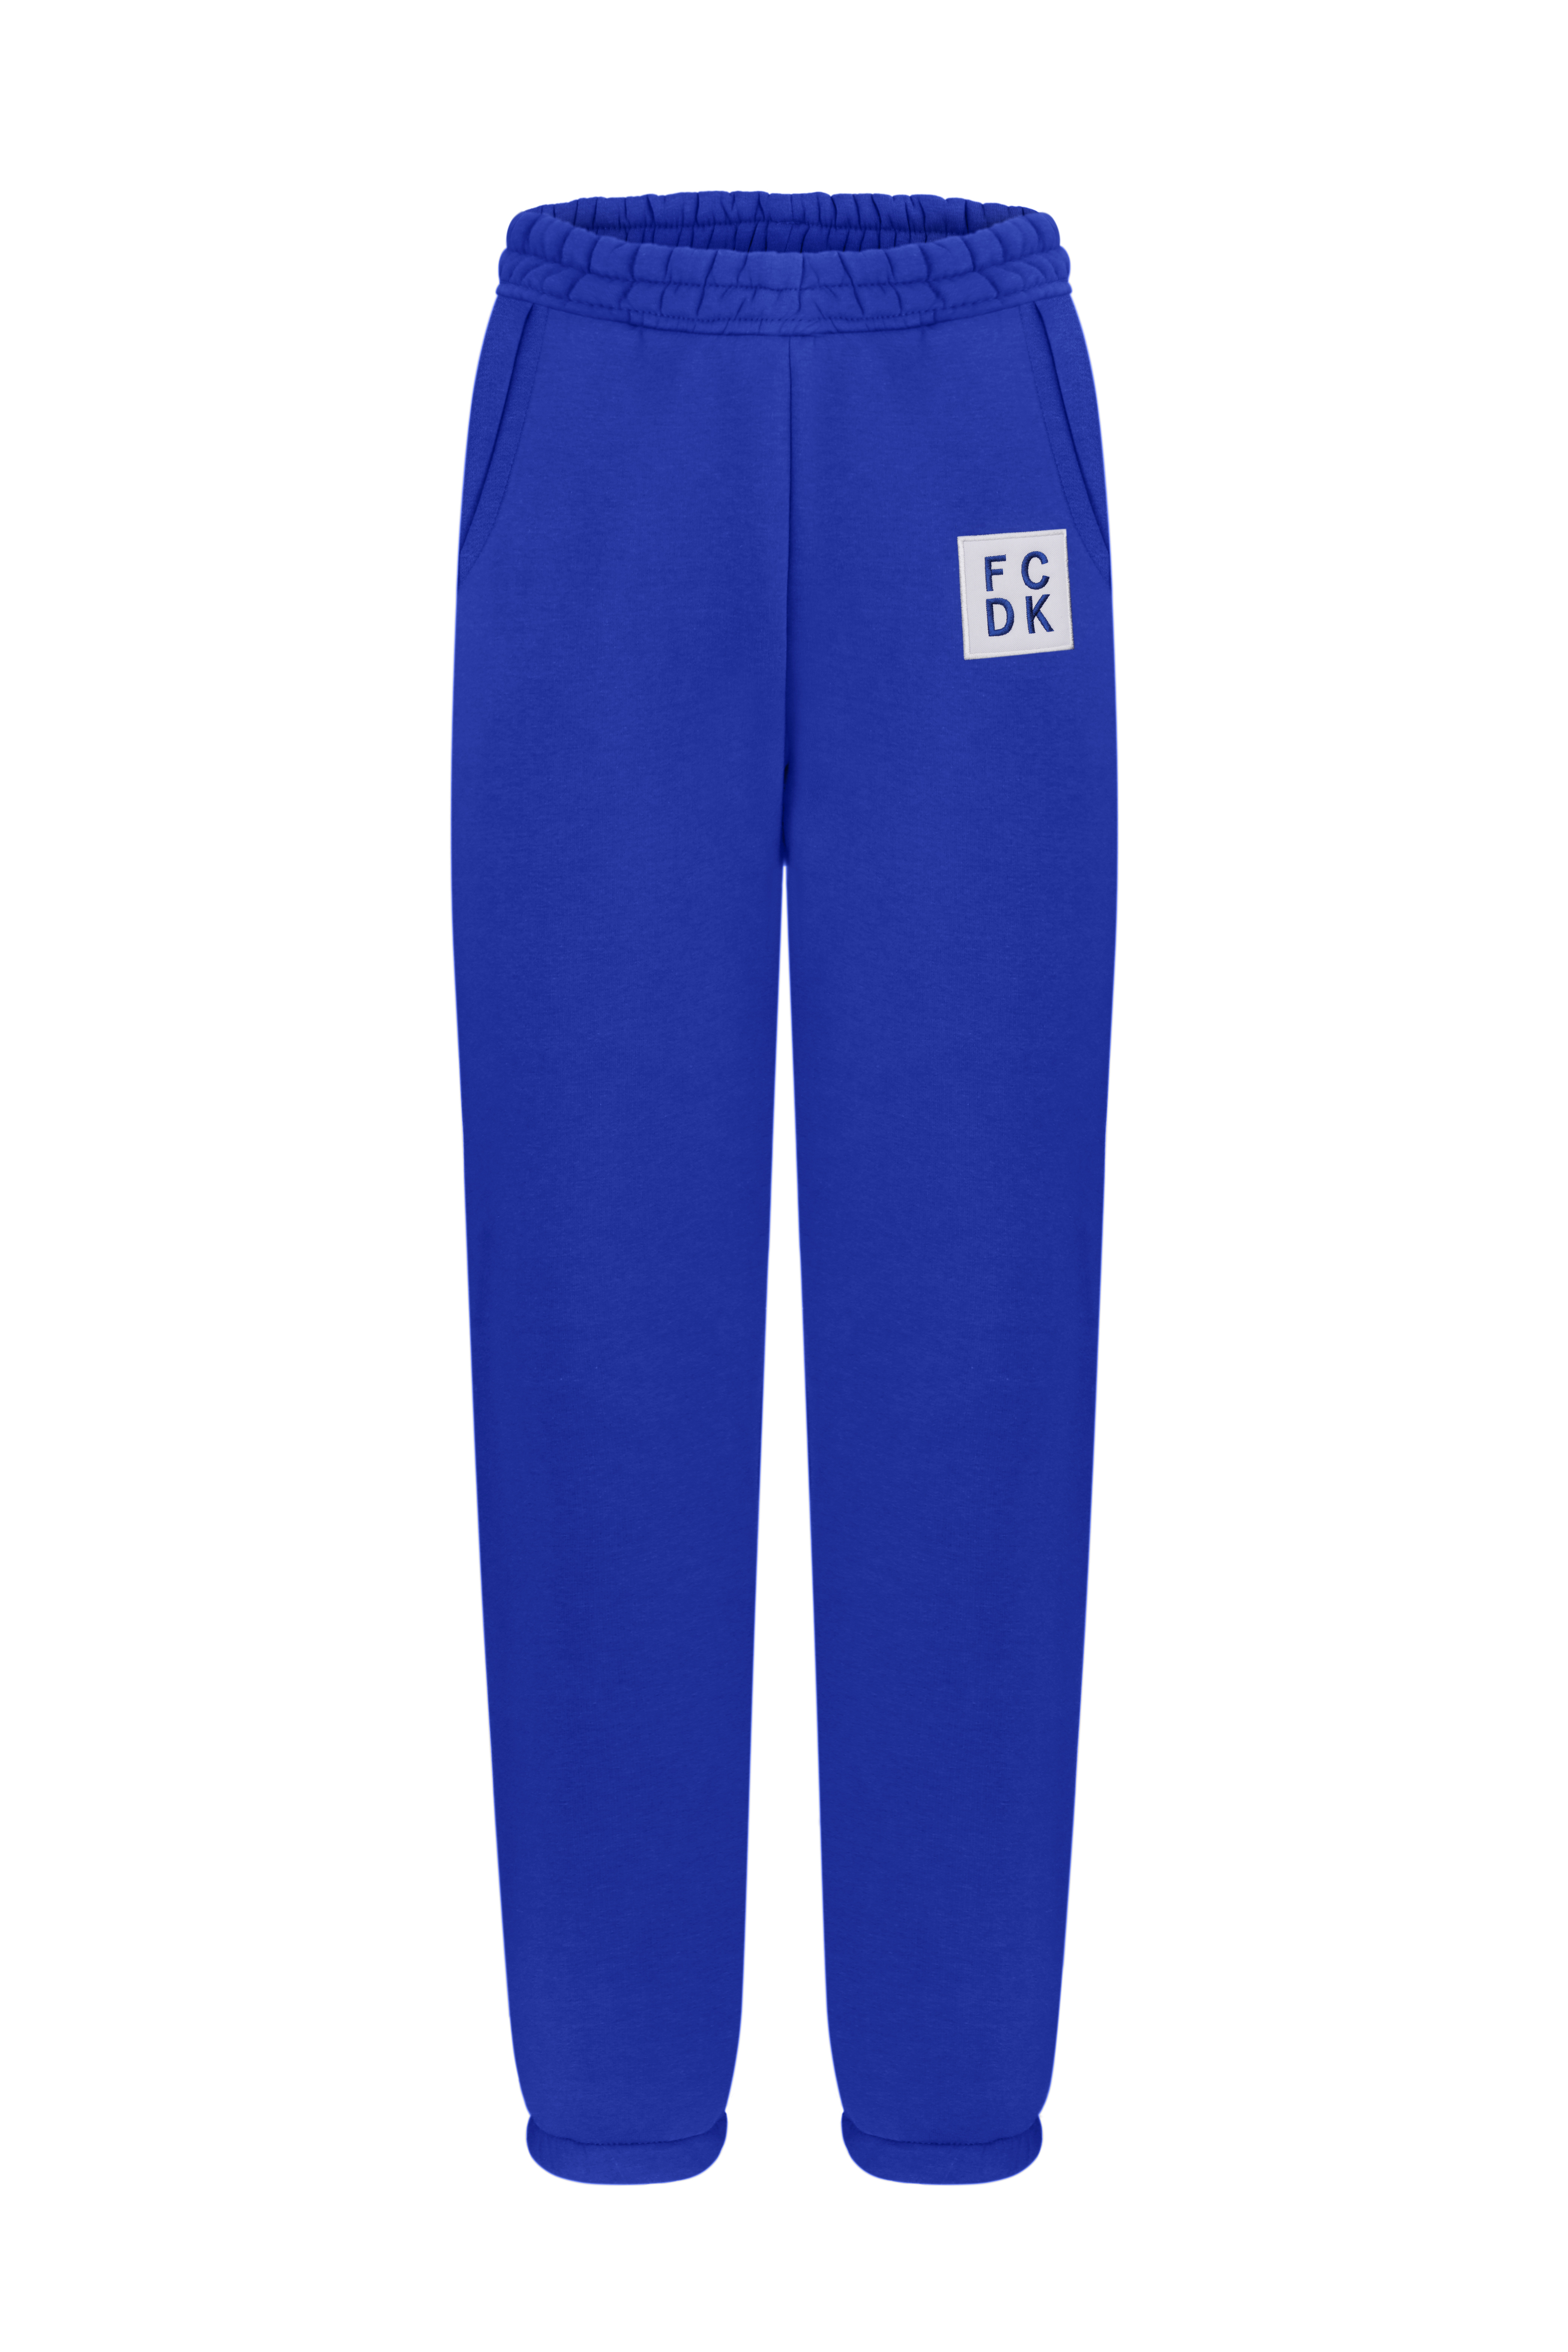 Winter blue pants "FCDK"